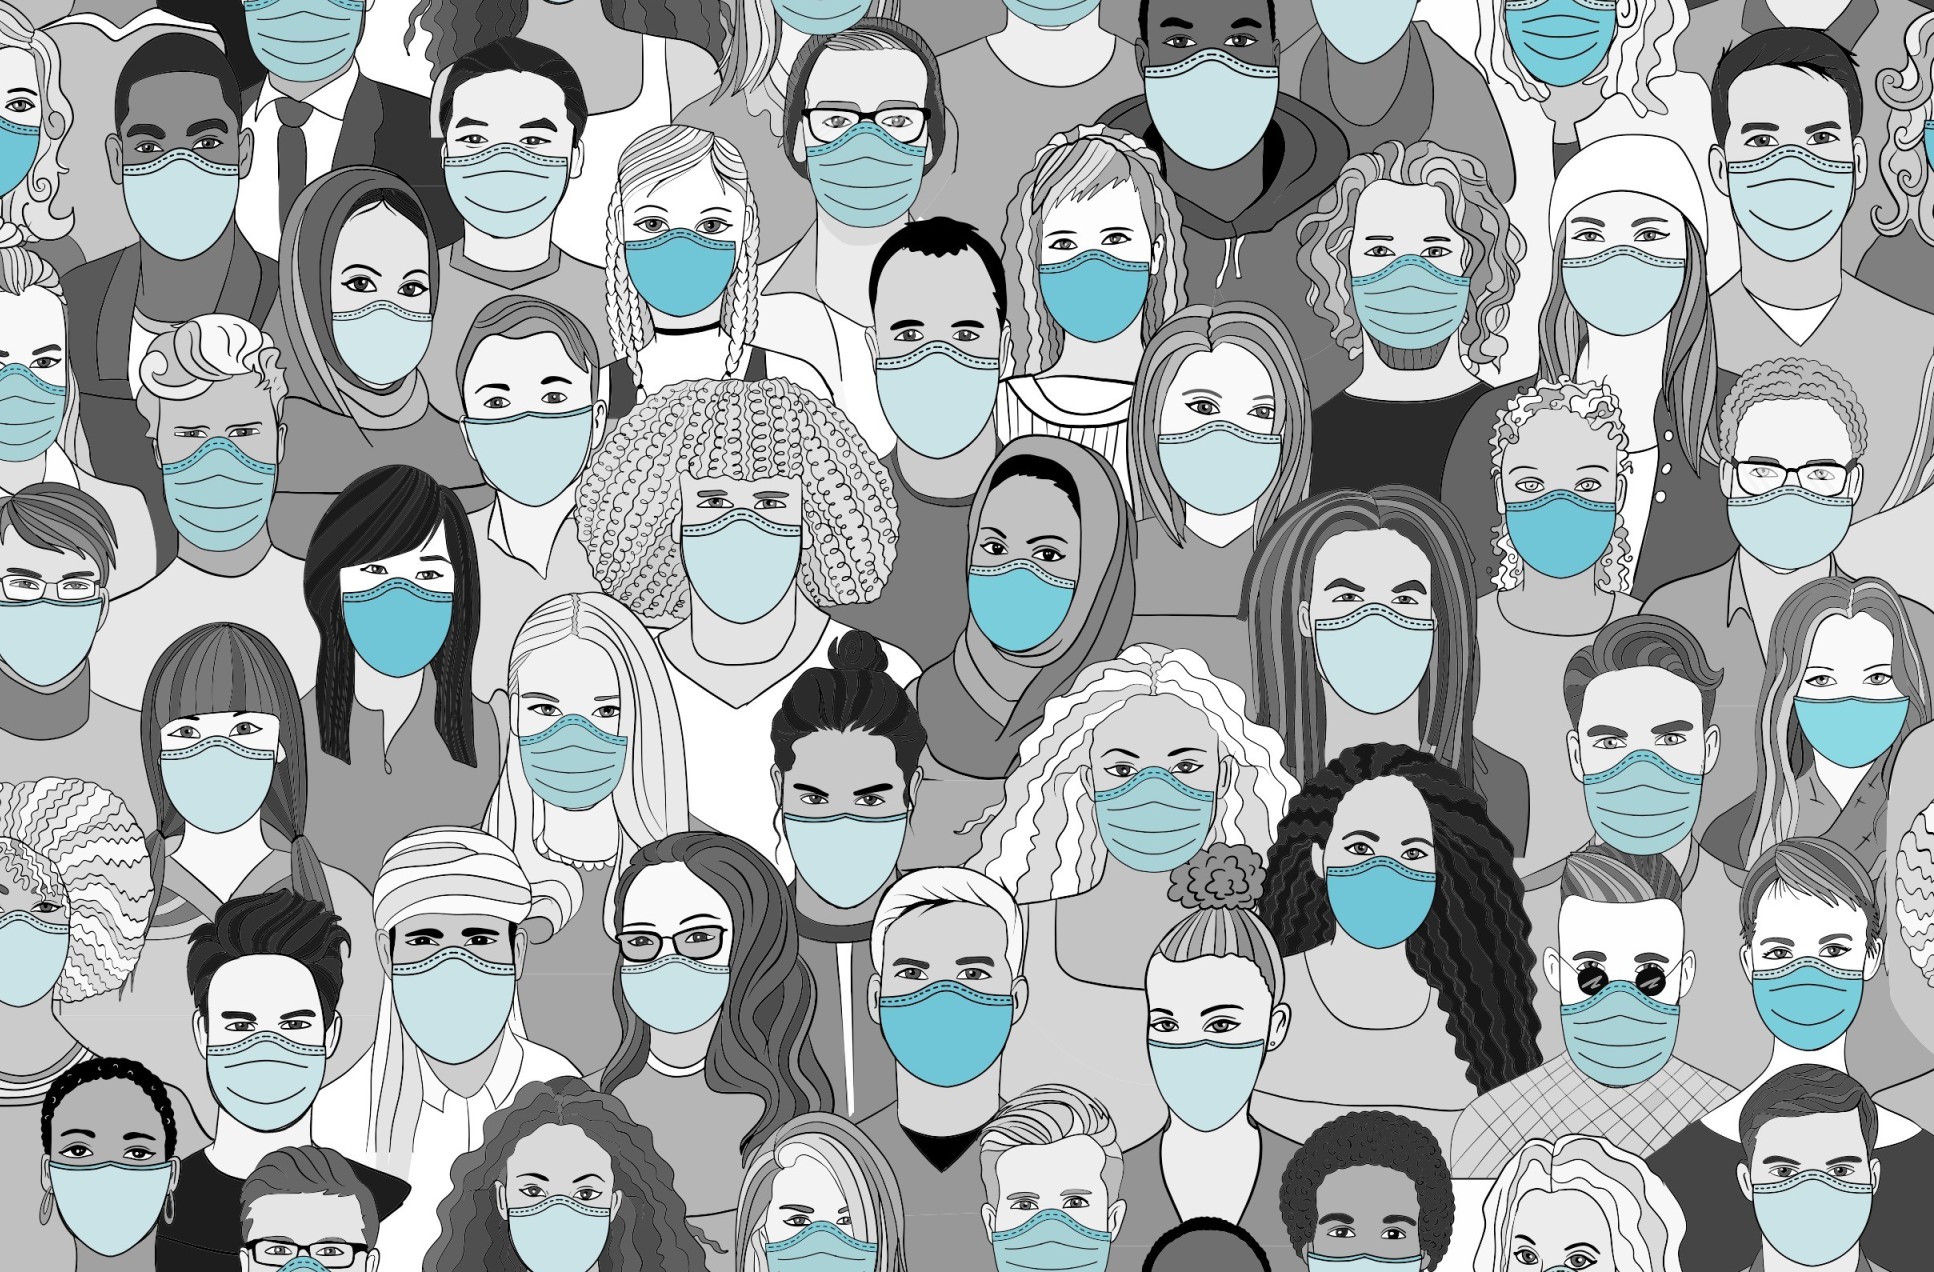 Greyscale illustration of mixed race people wearing blue medical masks